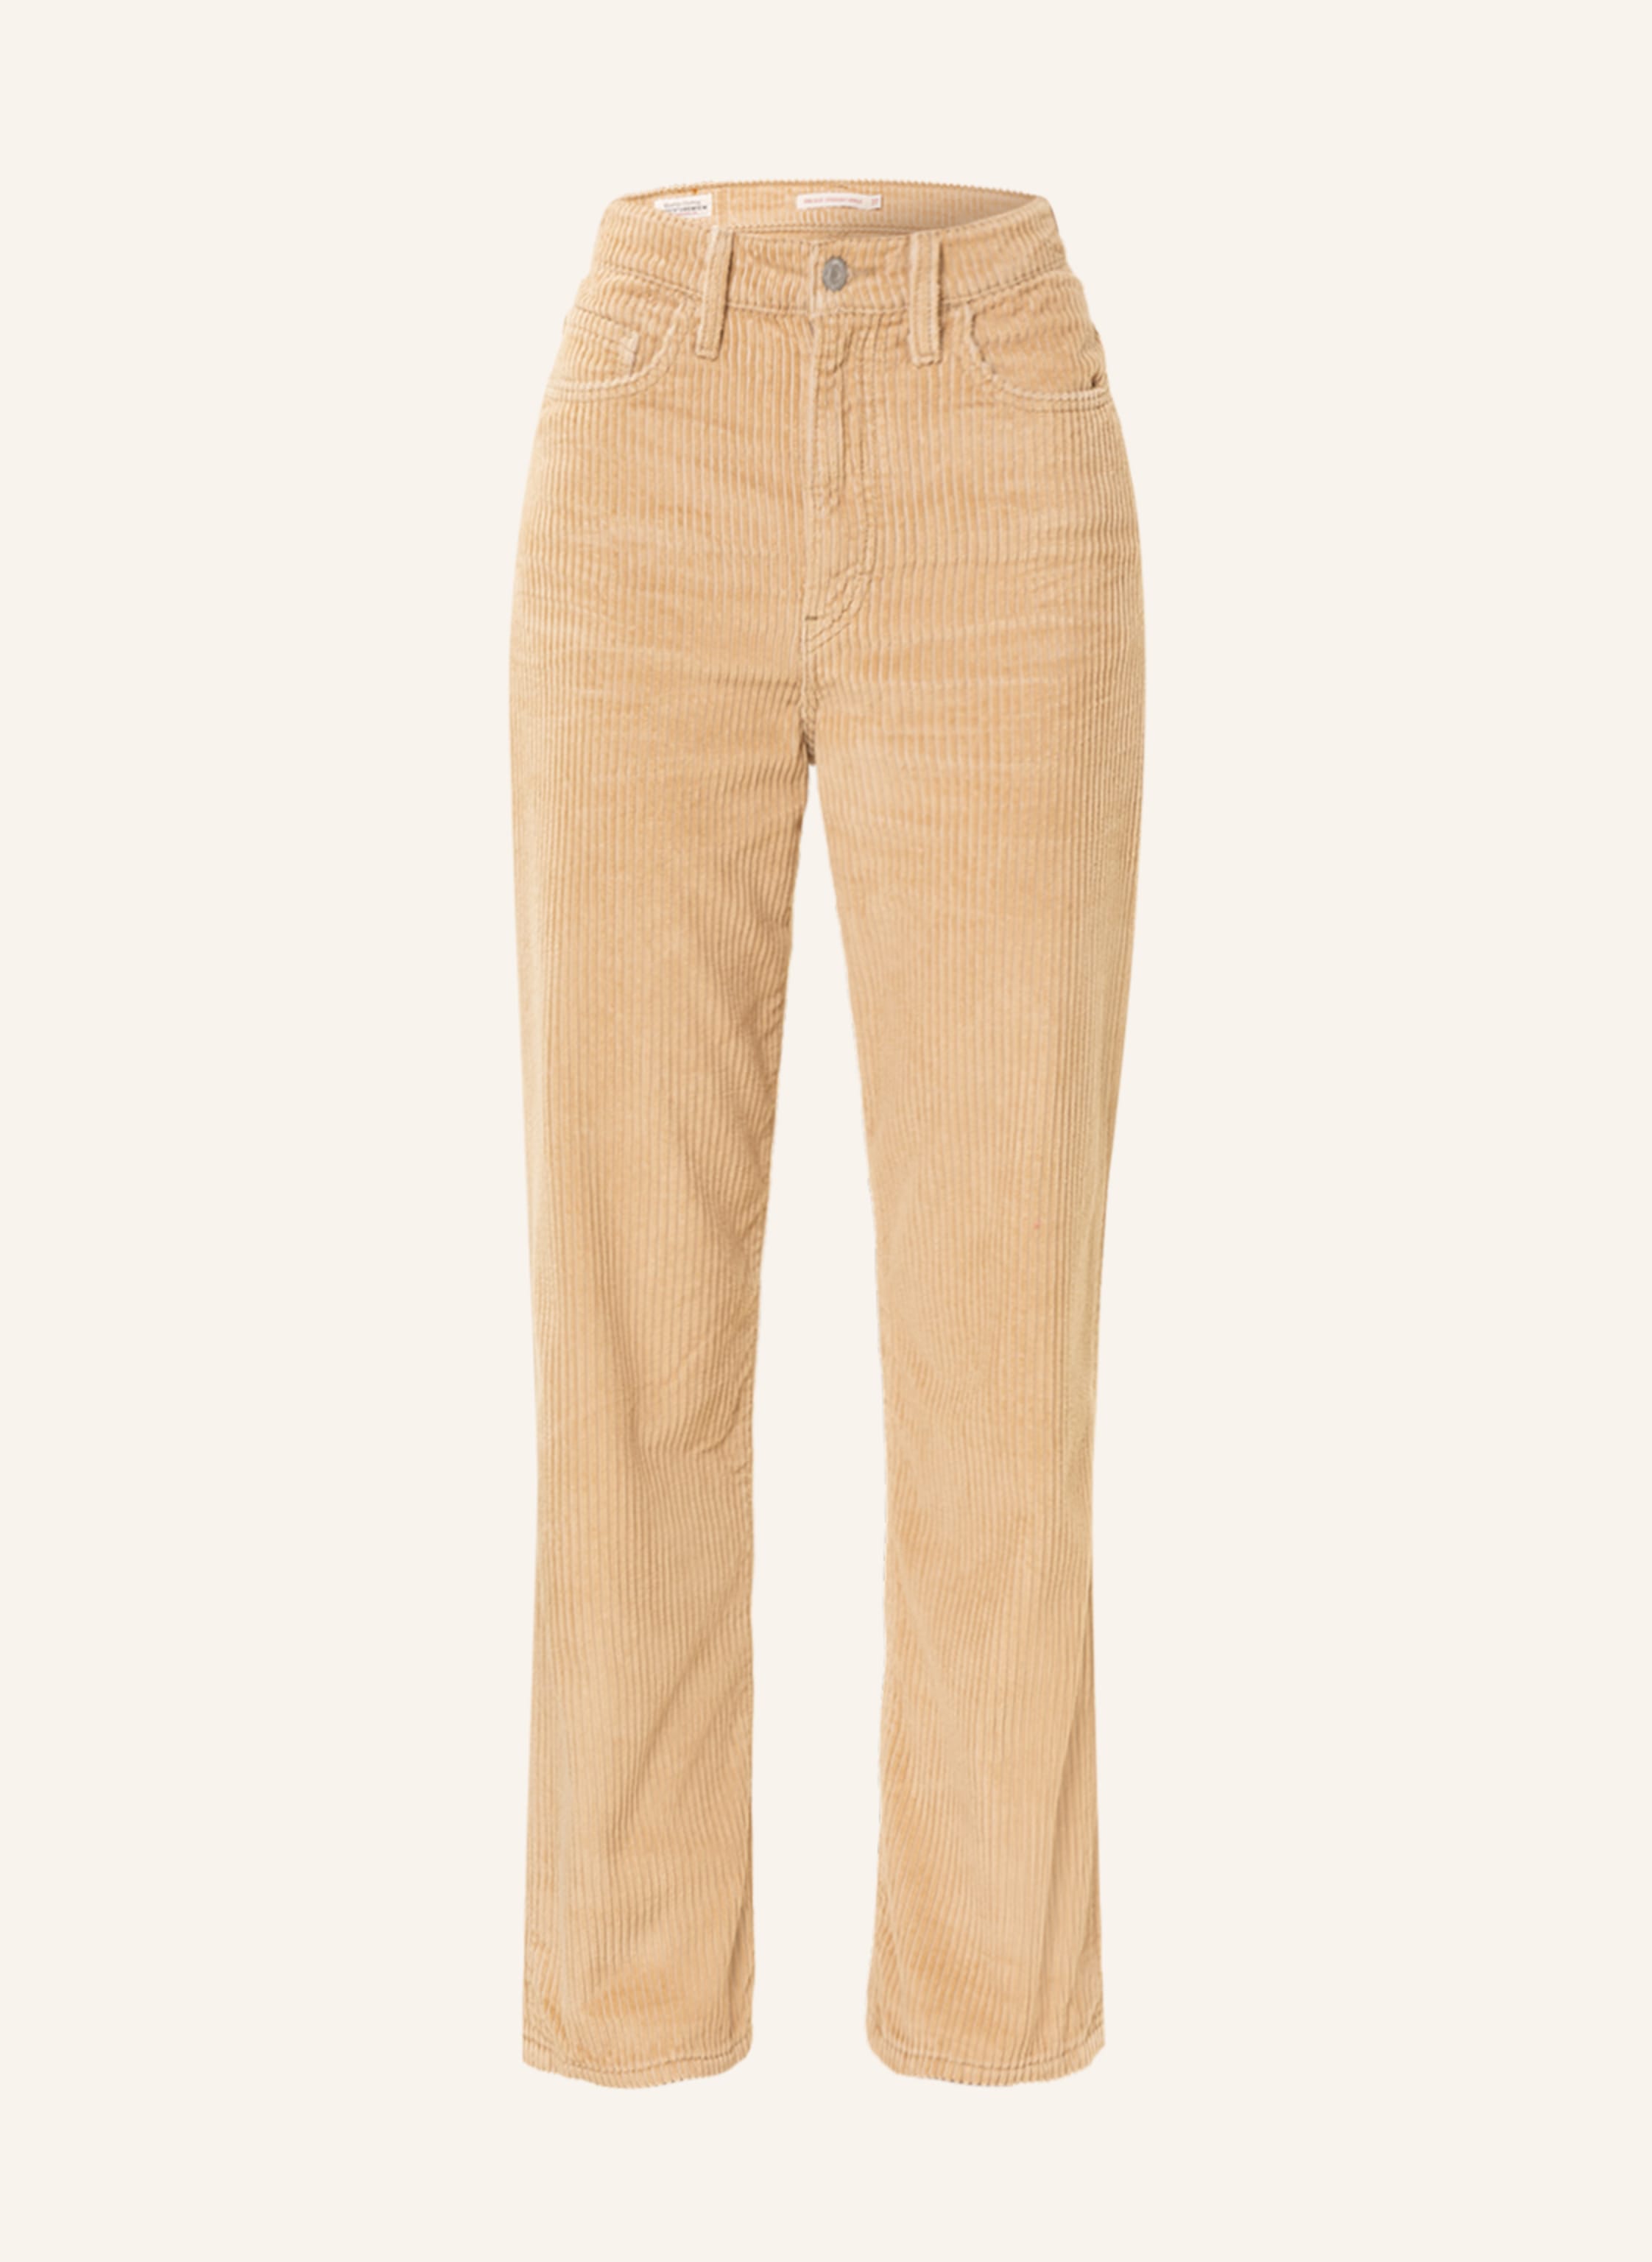 Levi's Corduroy Pants: Shop Corduroy Pants - Macy's